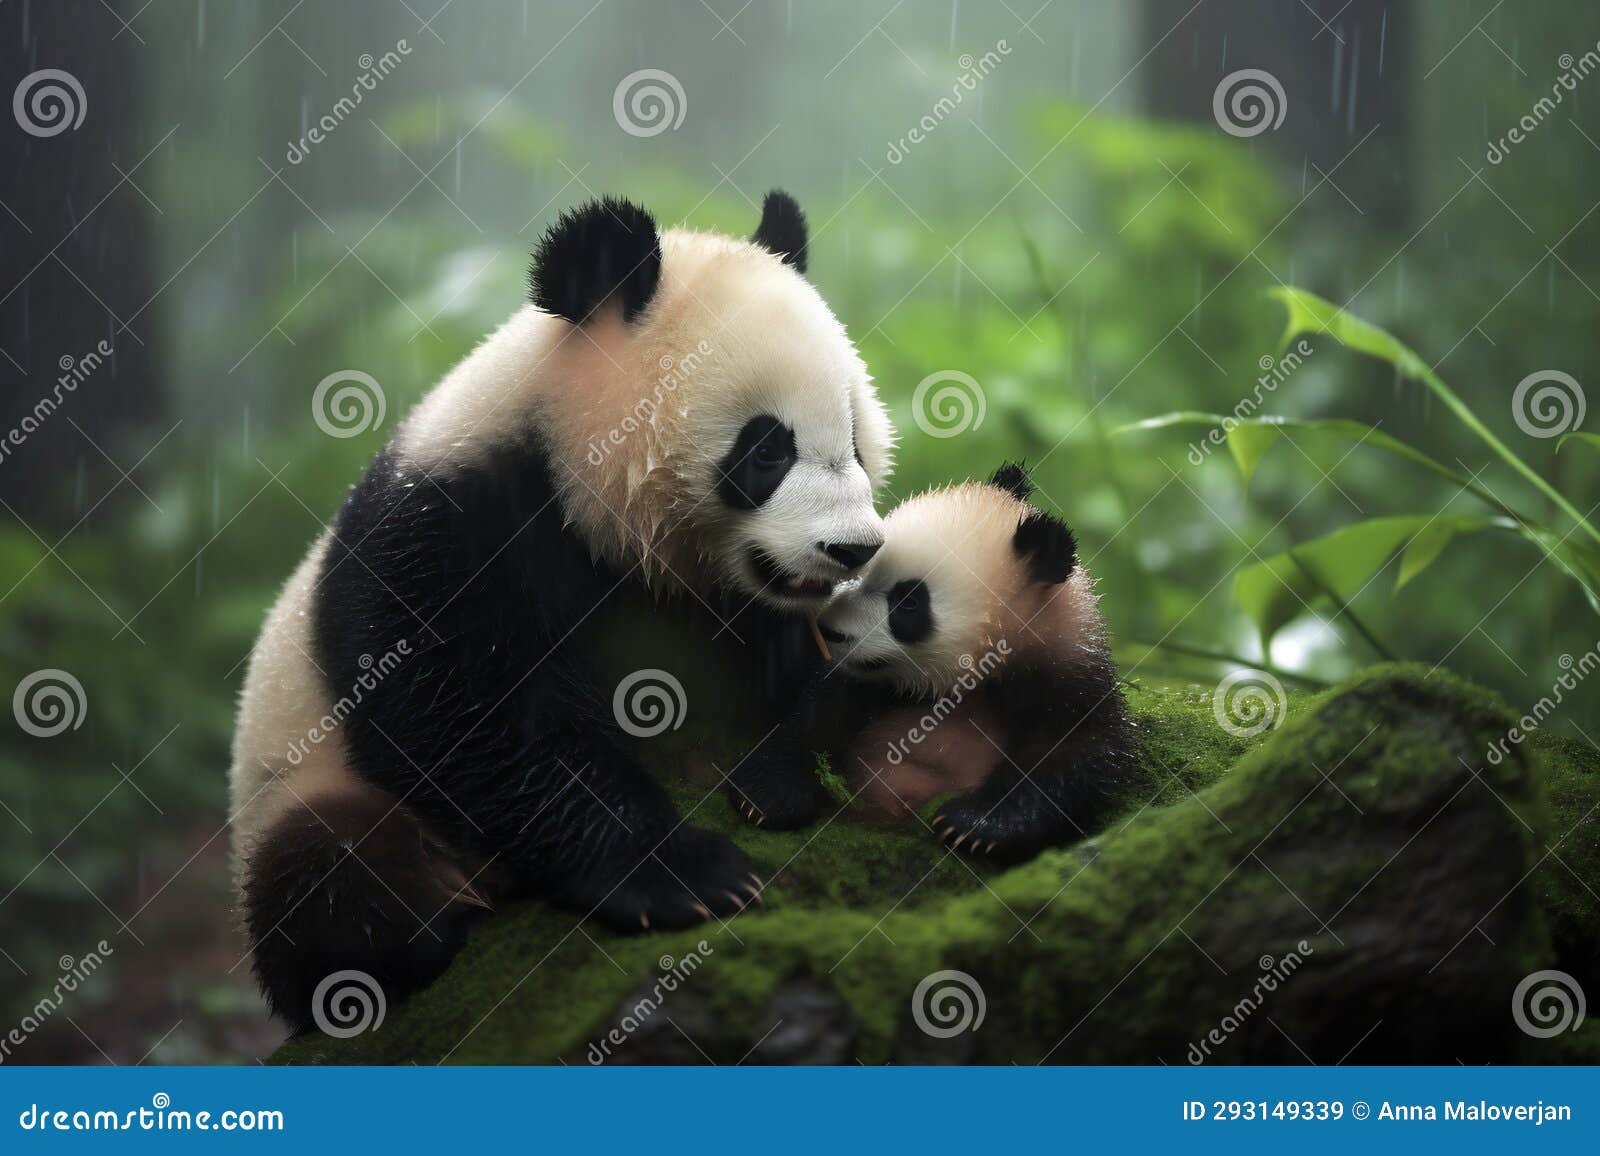 Kawaii Panda Images – Browse 14,774 Stock Photos, Vectors, and Video